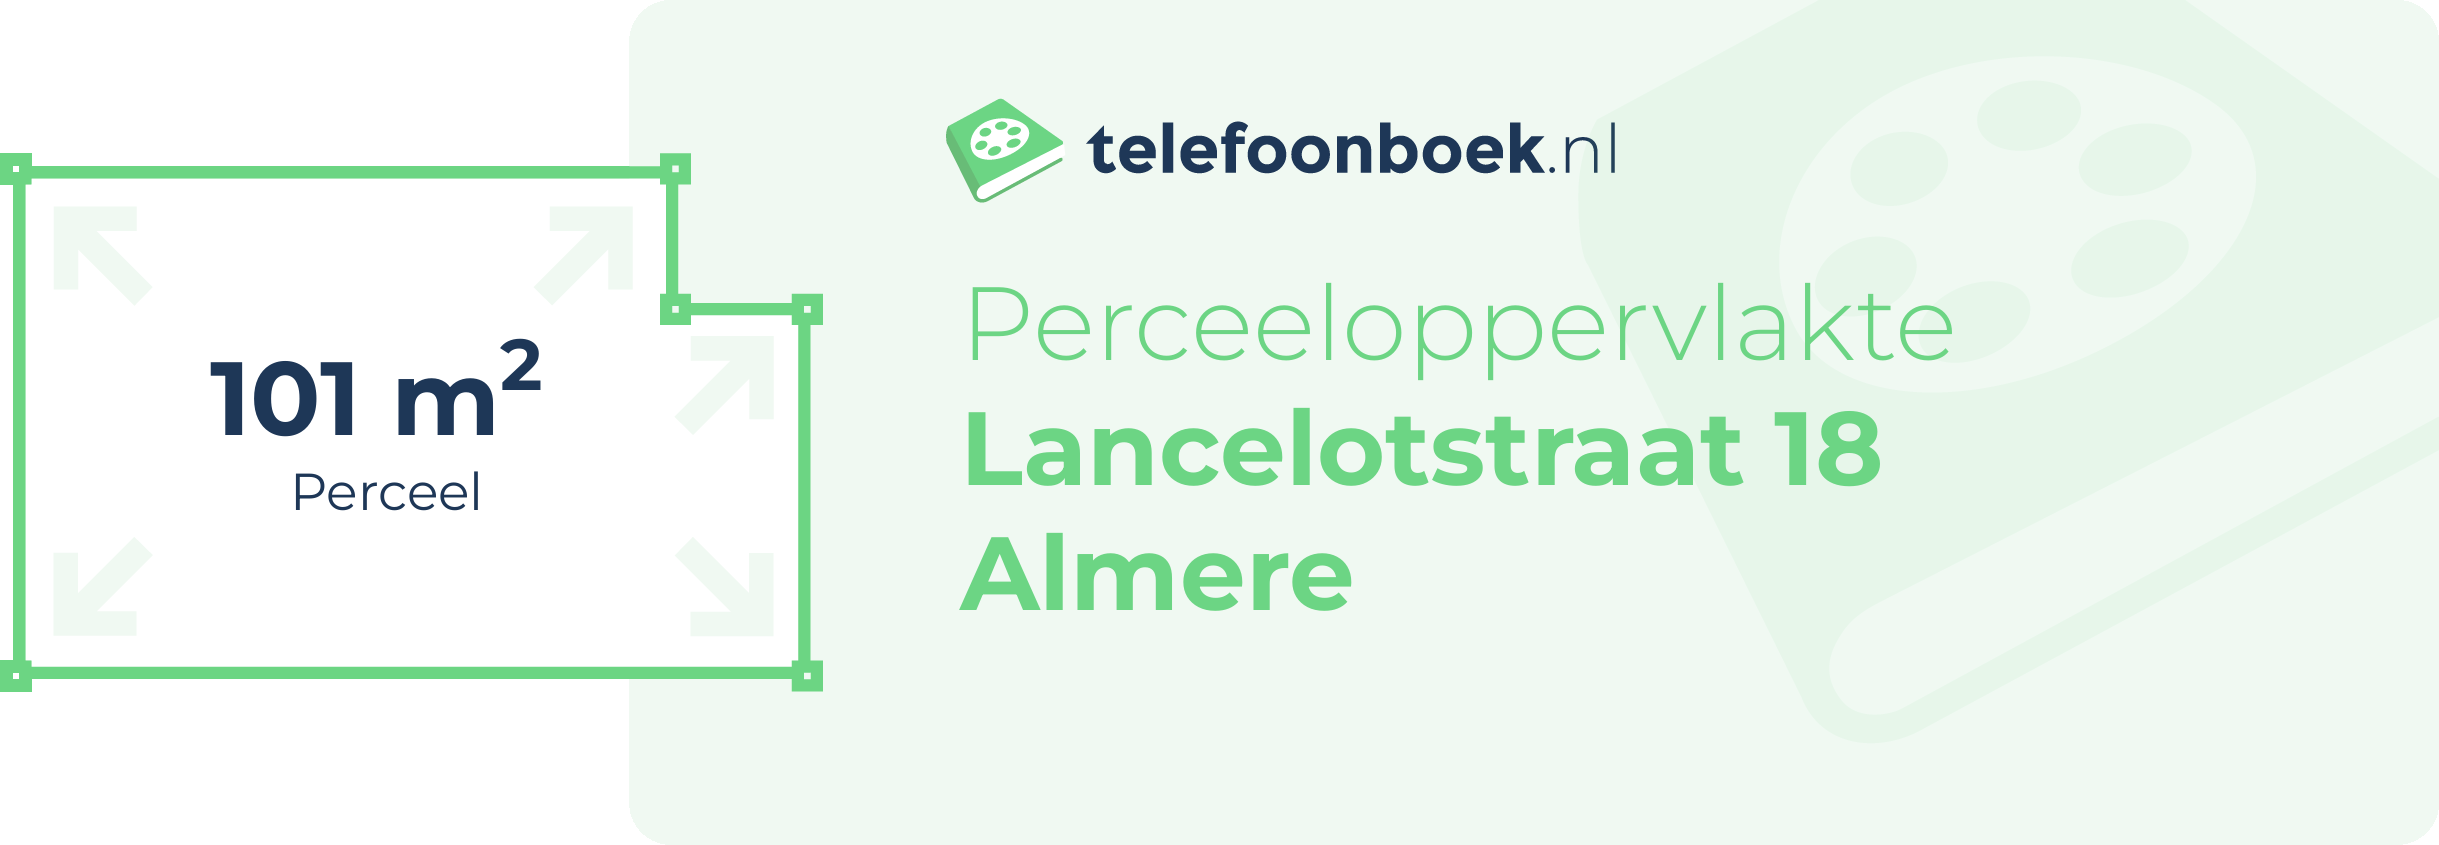 Perceeloppervlakte Lancelotstraat 18 Almere